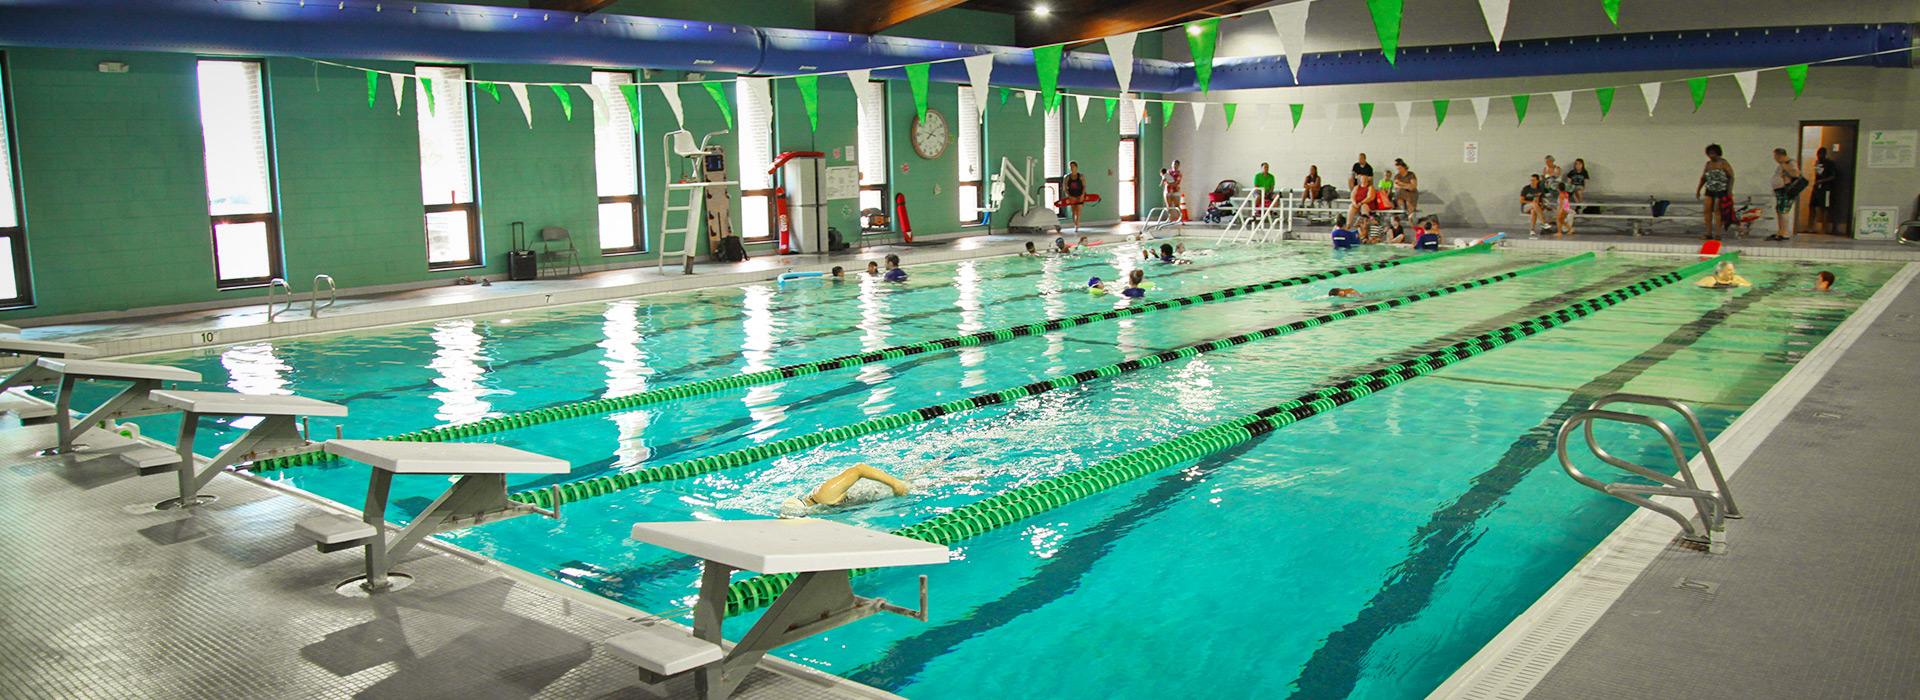 Greenbrier Family YMCA indoor pool